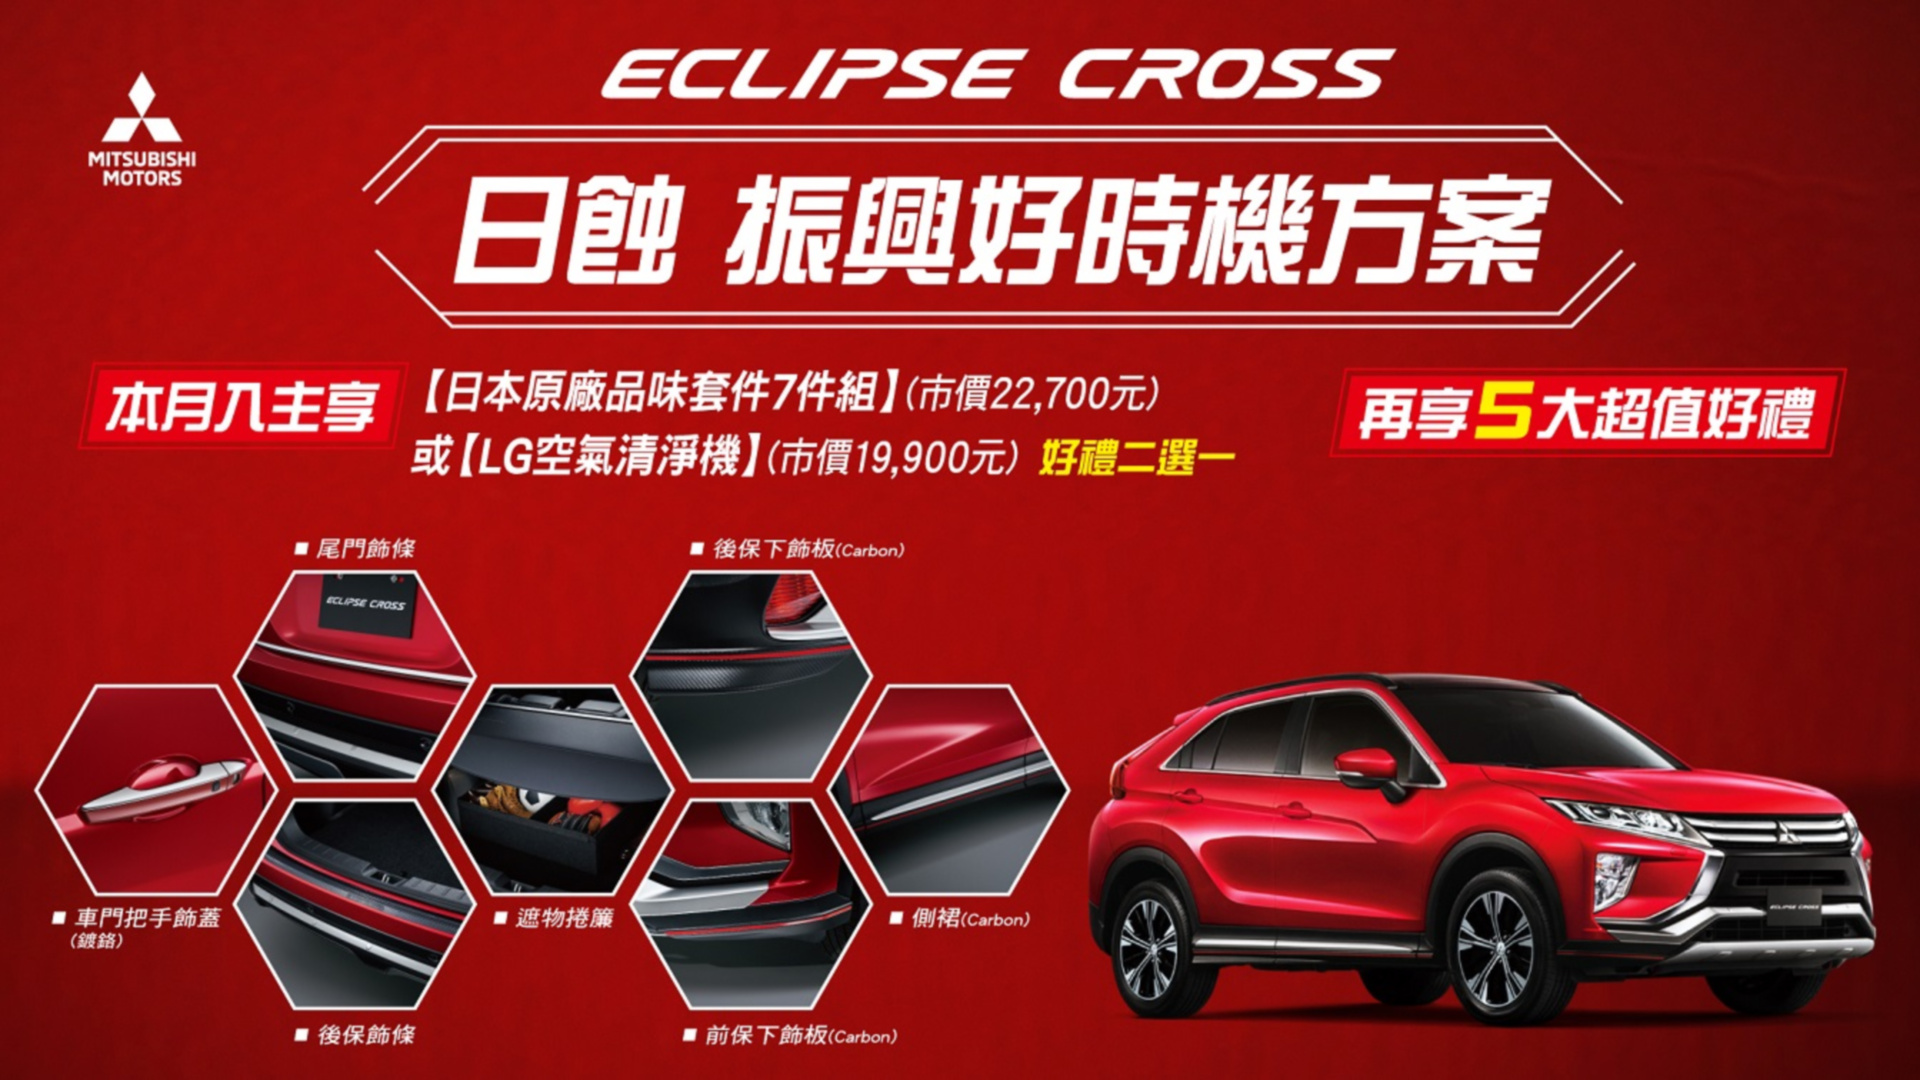 SMALL_本月購ECLIPSE CROSS送日本原廠品味套件七件 組